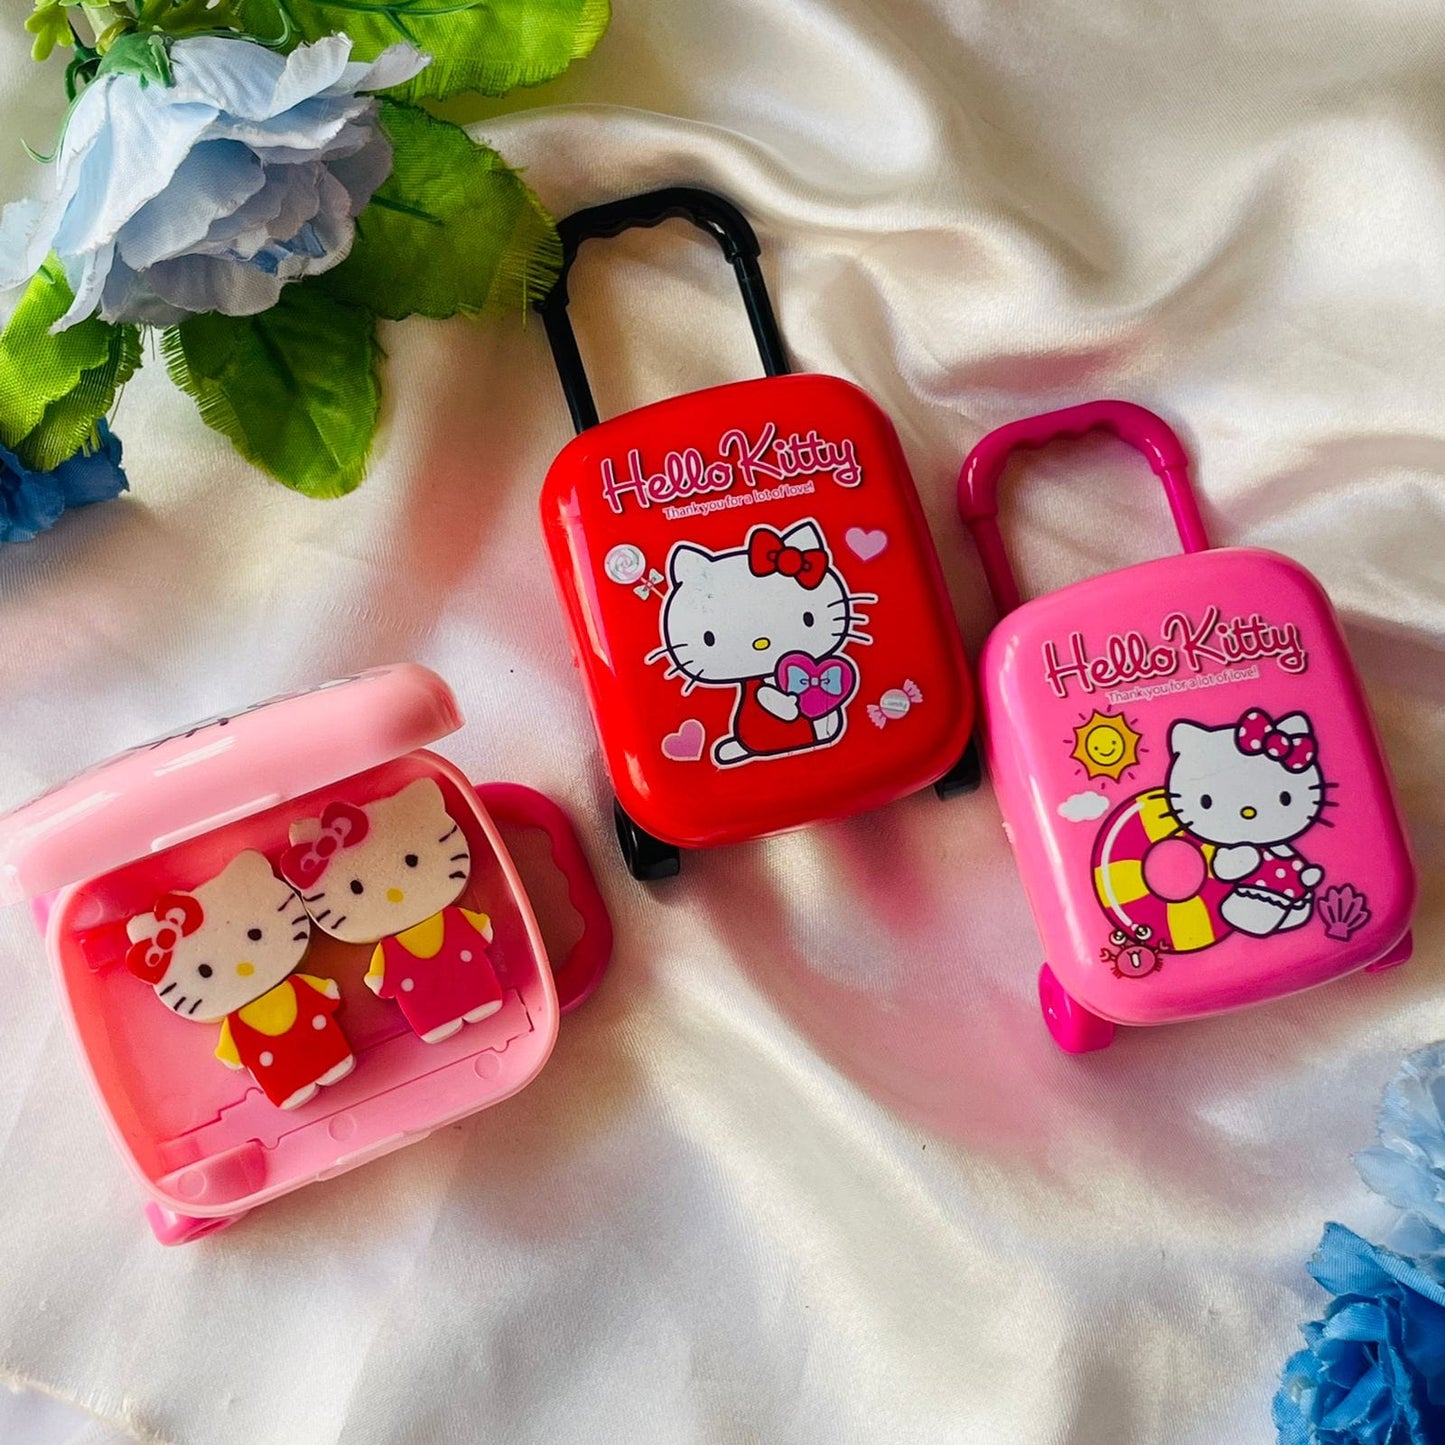 Hello Kitty Eraser set of 2 in cute Trolley